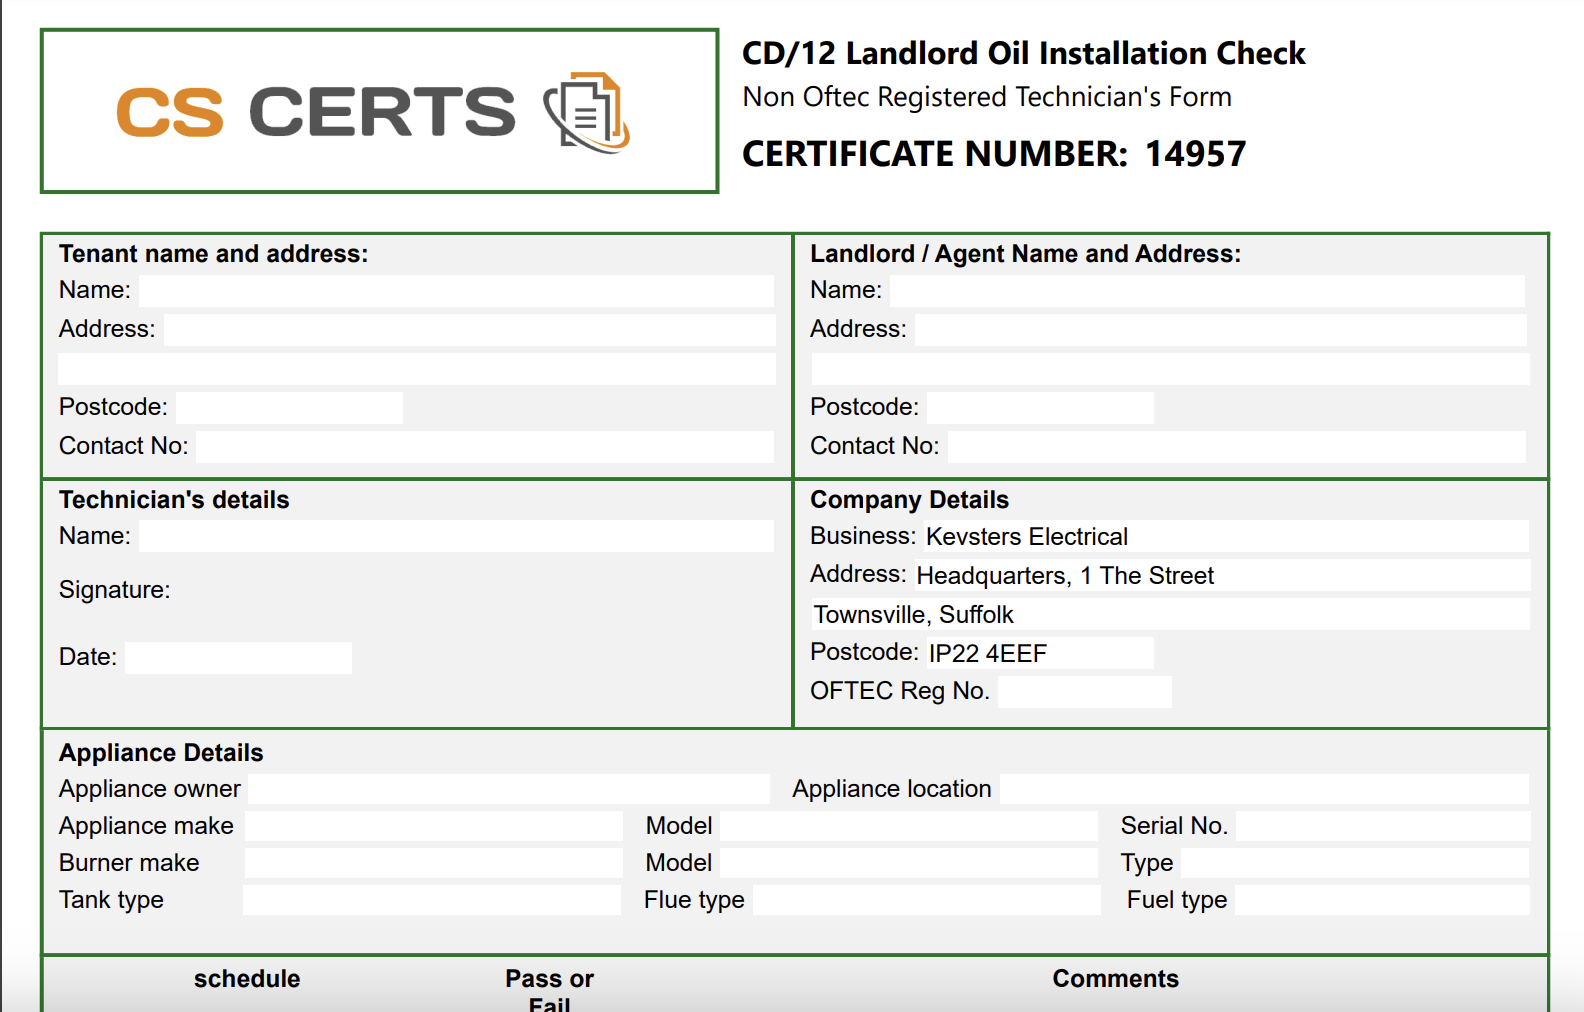 CD 12 Oil Certificate